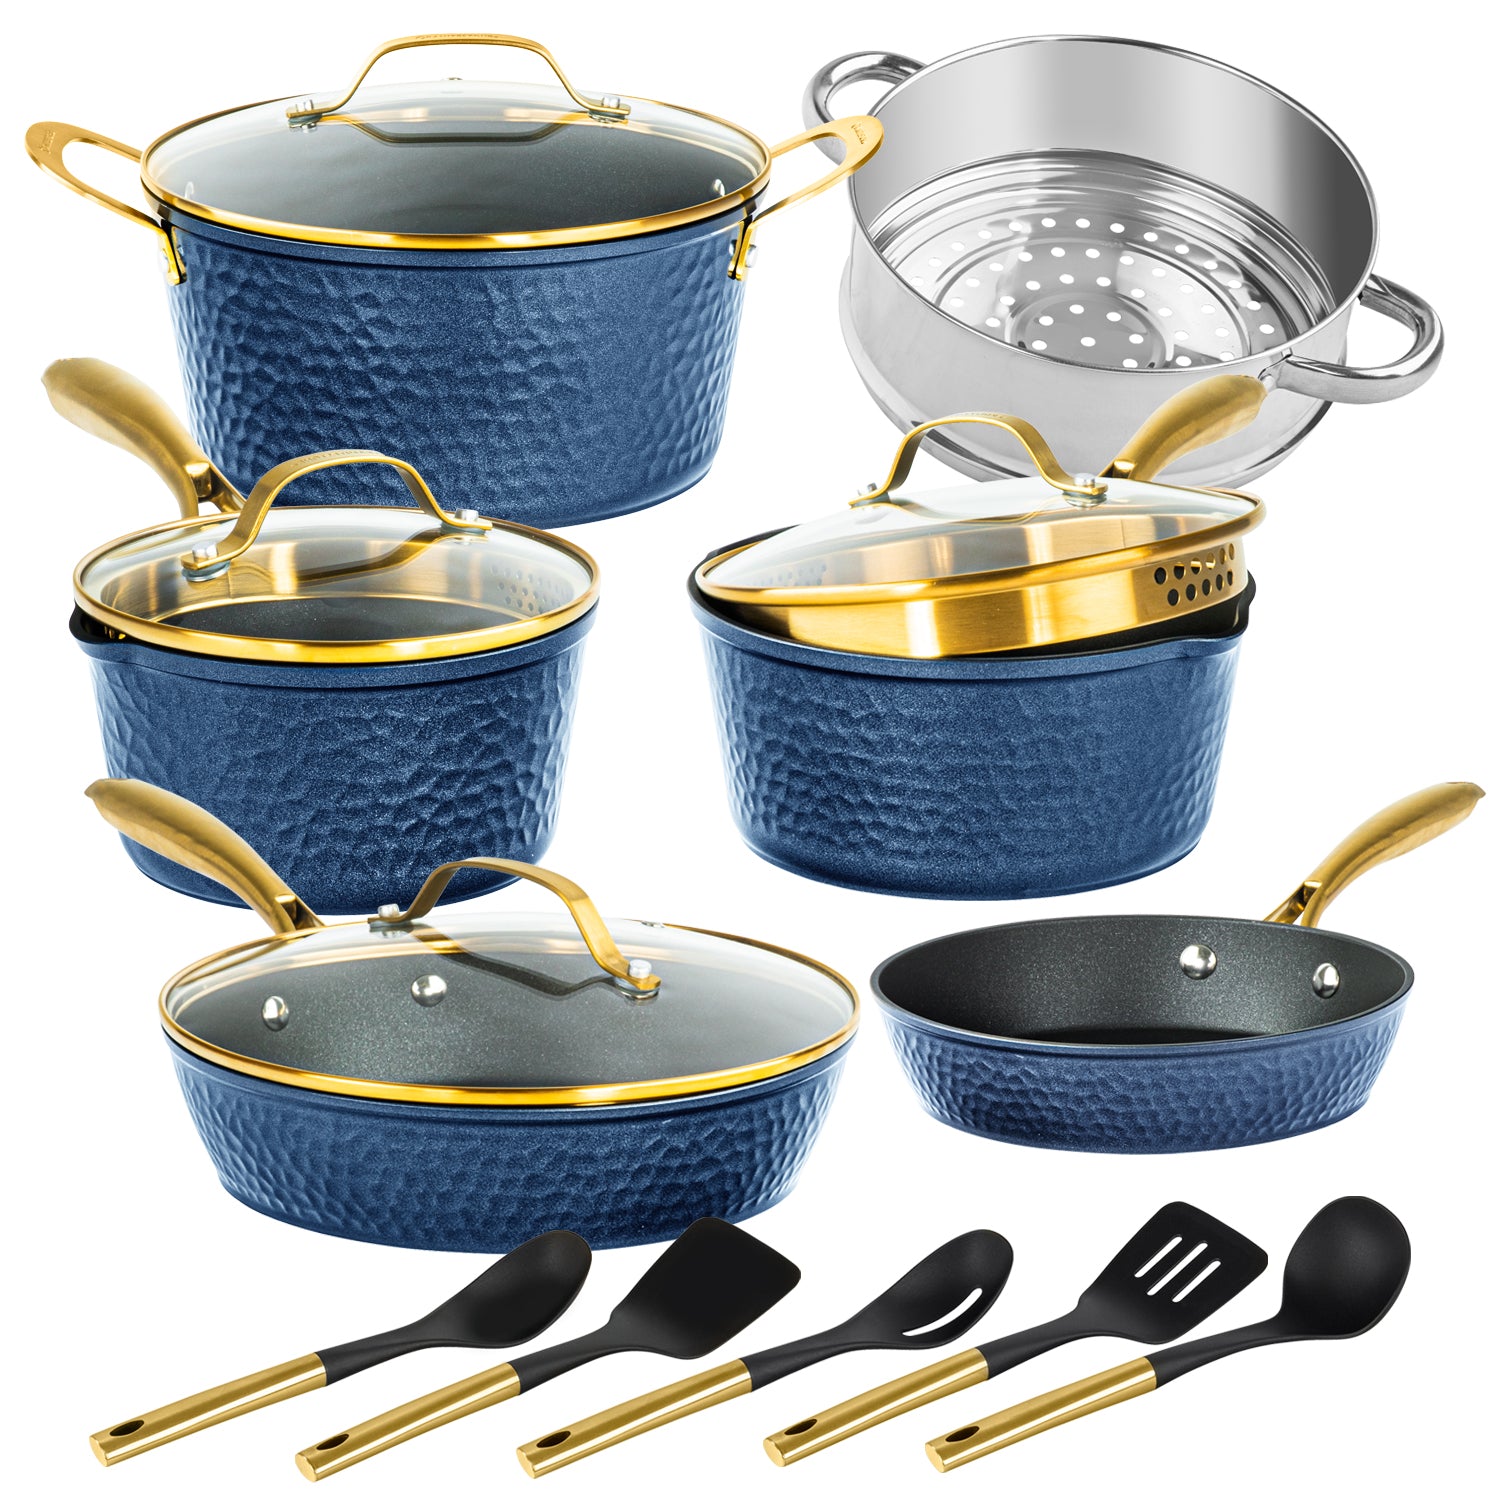 Granitestone Blue 5-Piece Nonstick Pots and Pans Cookware Set